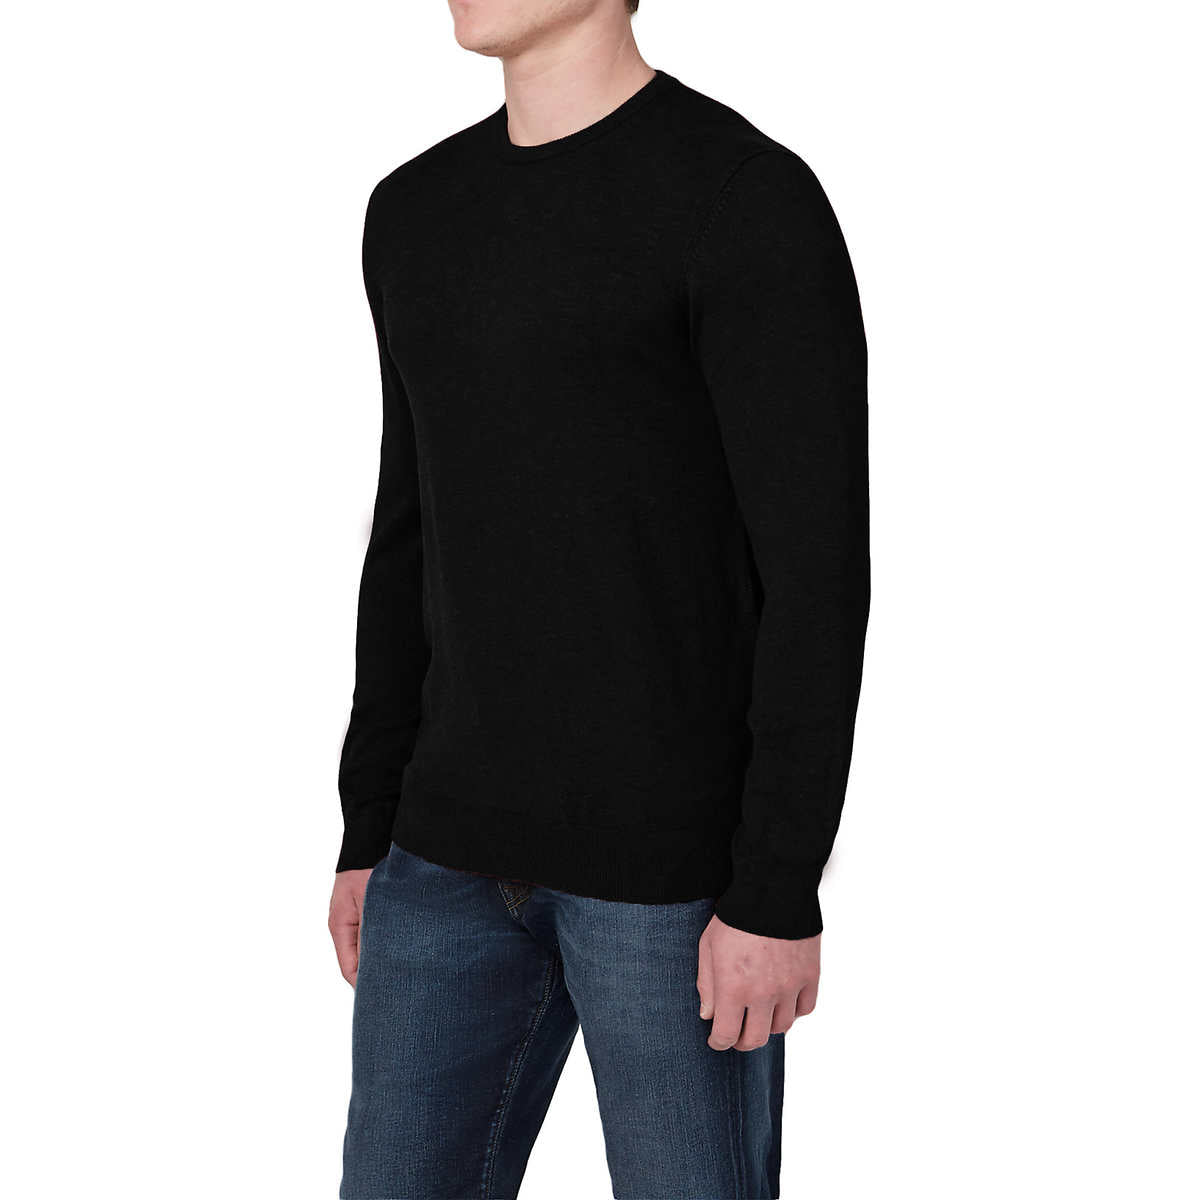 Buffalo David Bitton Men’s Crew Neck Soft Knit Mid-Weight Pullover Sweater